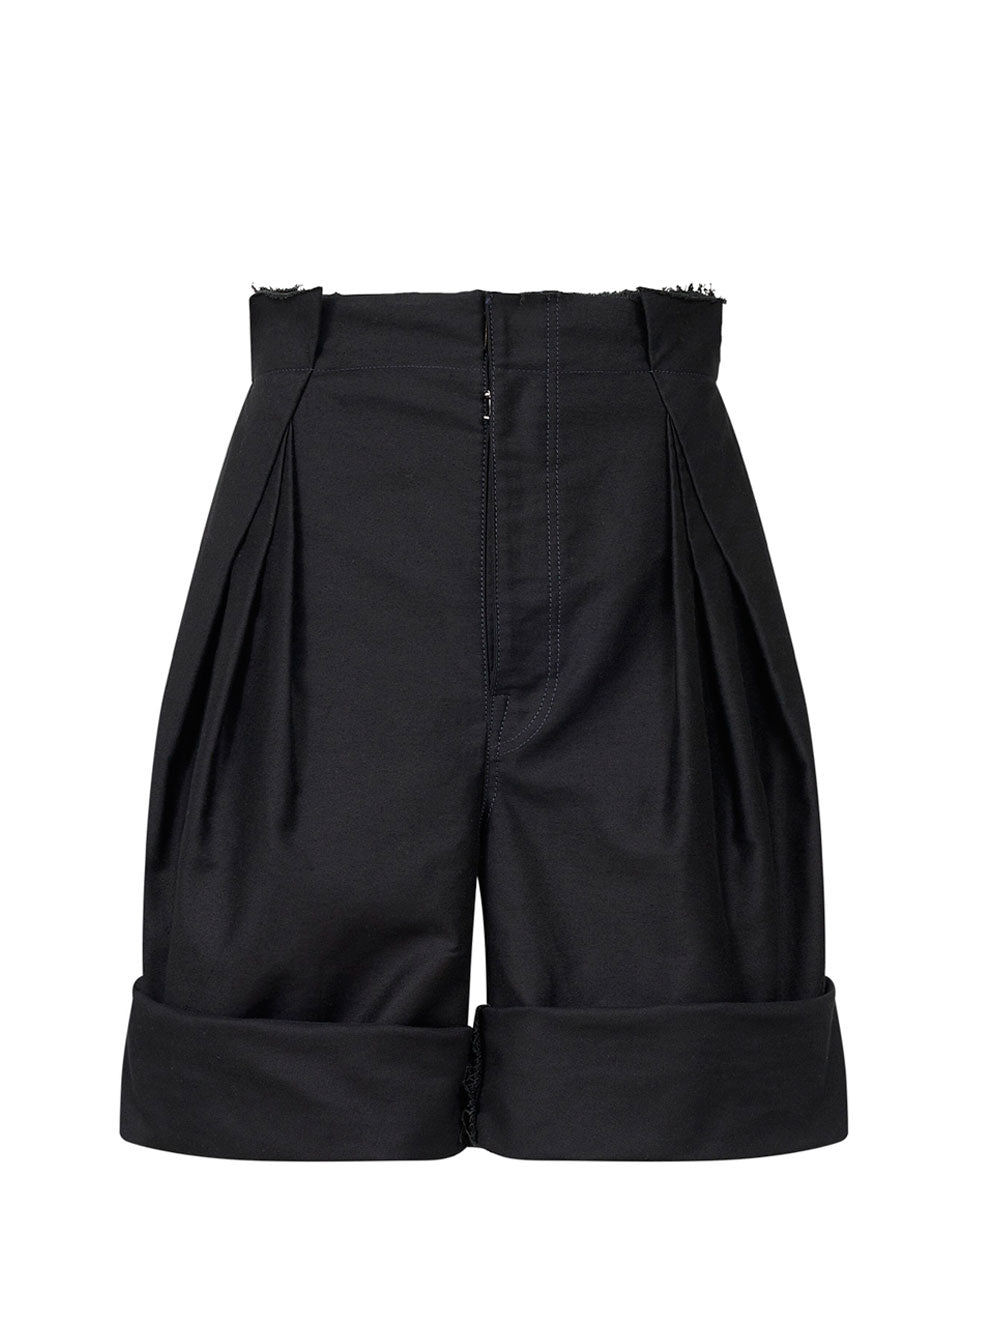 Pleat-detailing shorts